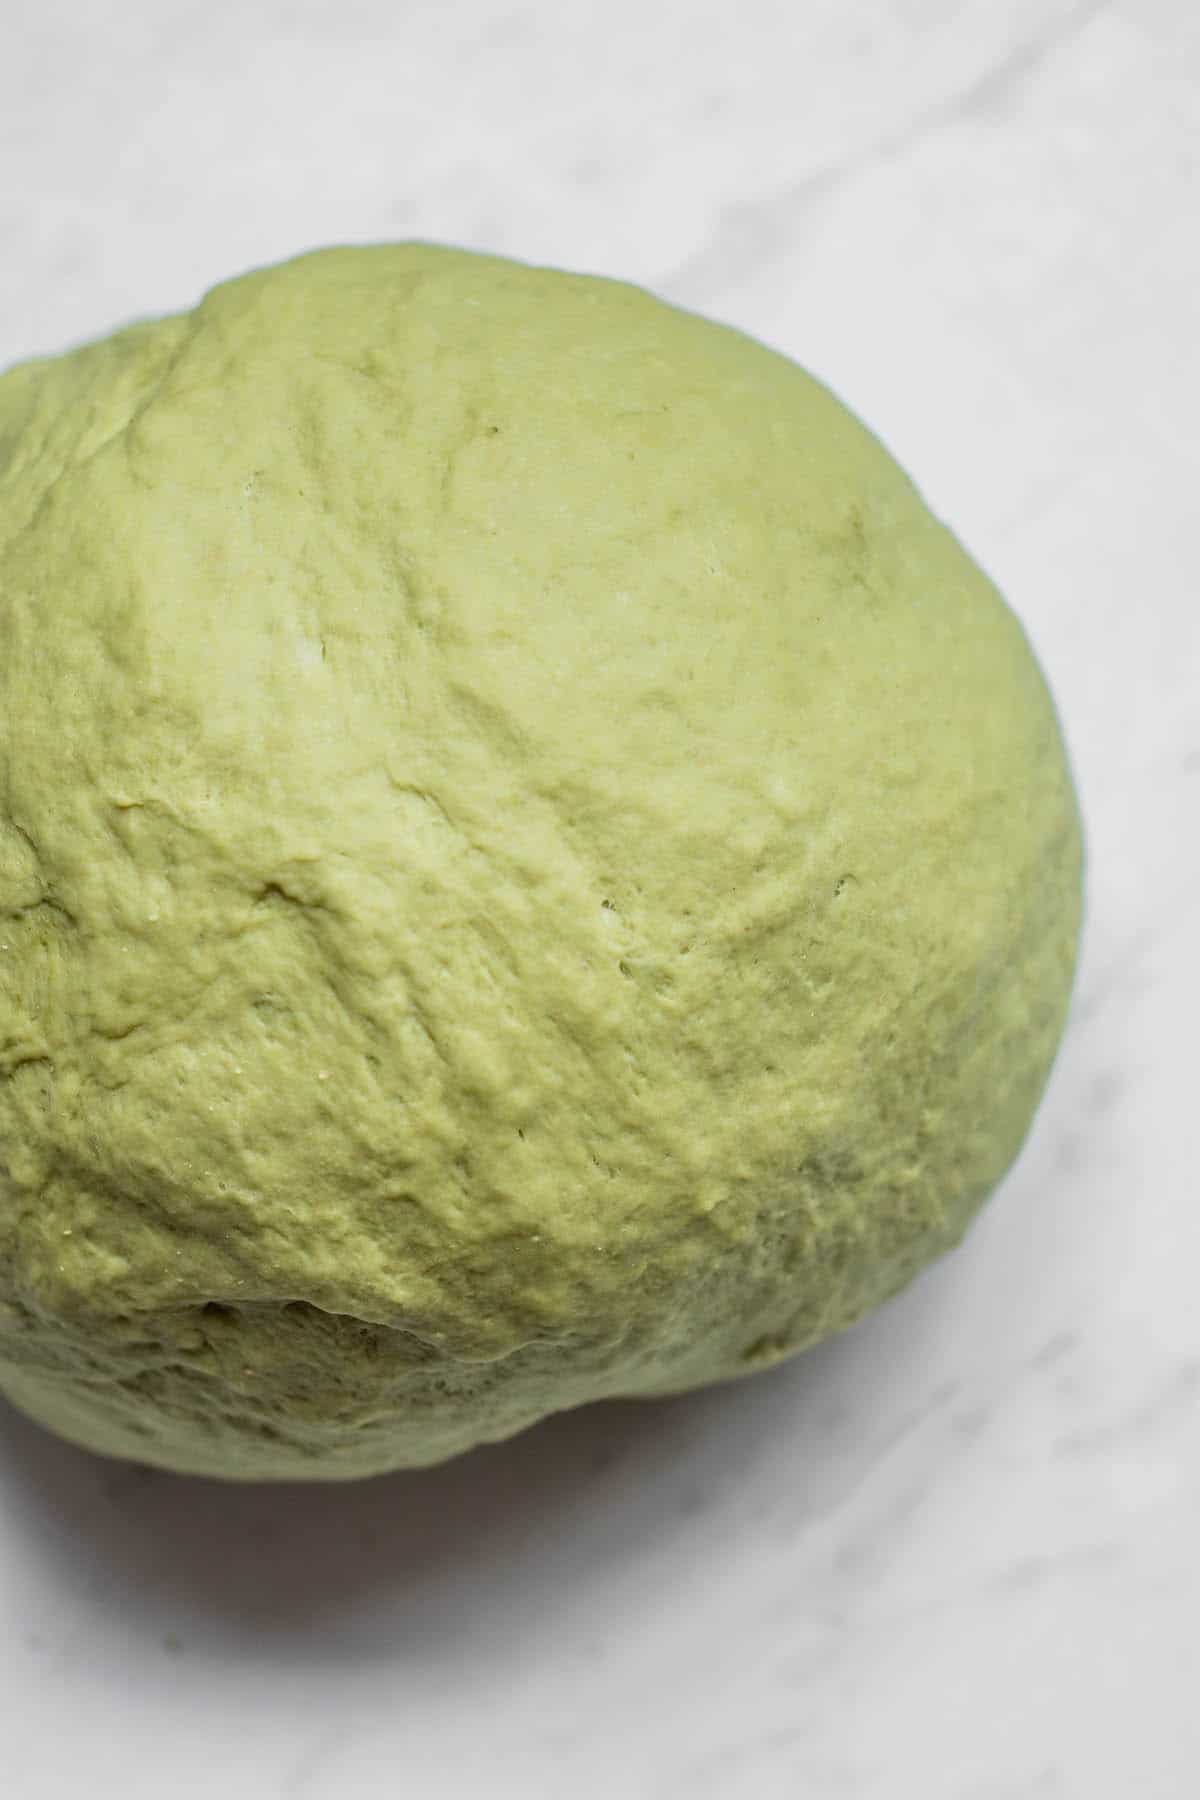 a ball of green dough.